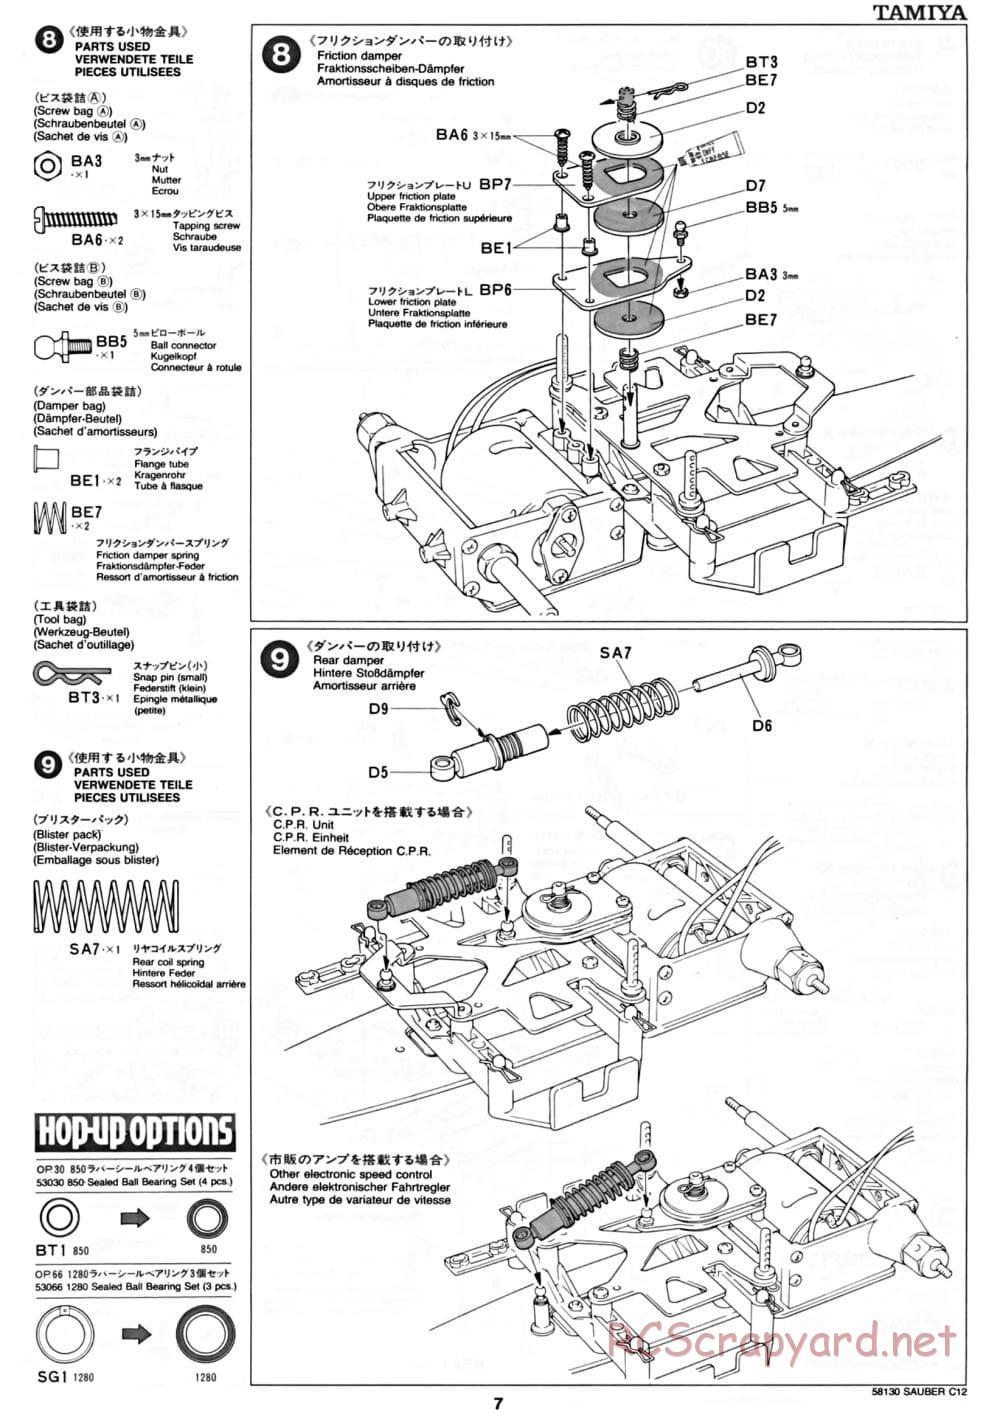 Tamiya - Sauber C12 - F103 Chassis - Manual - Page 7